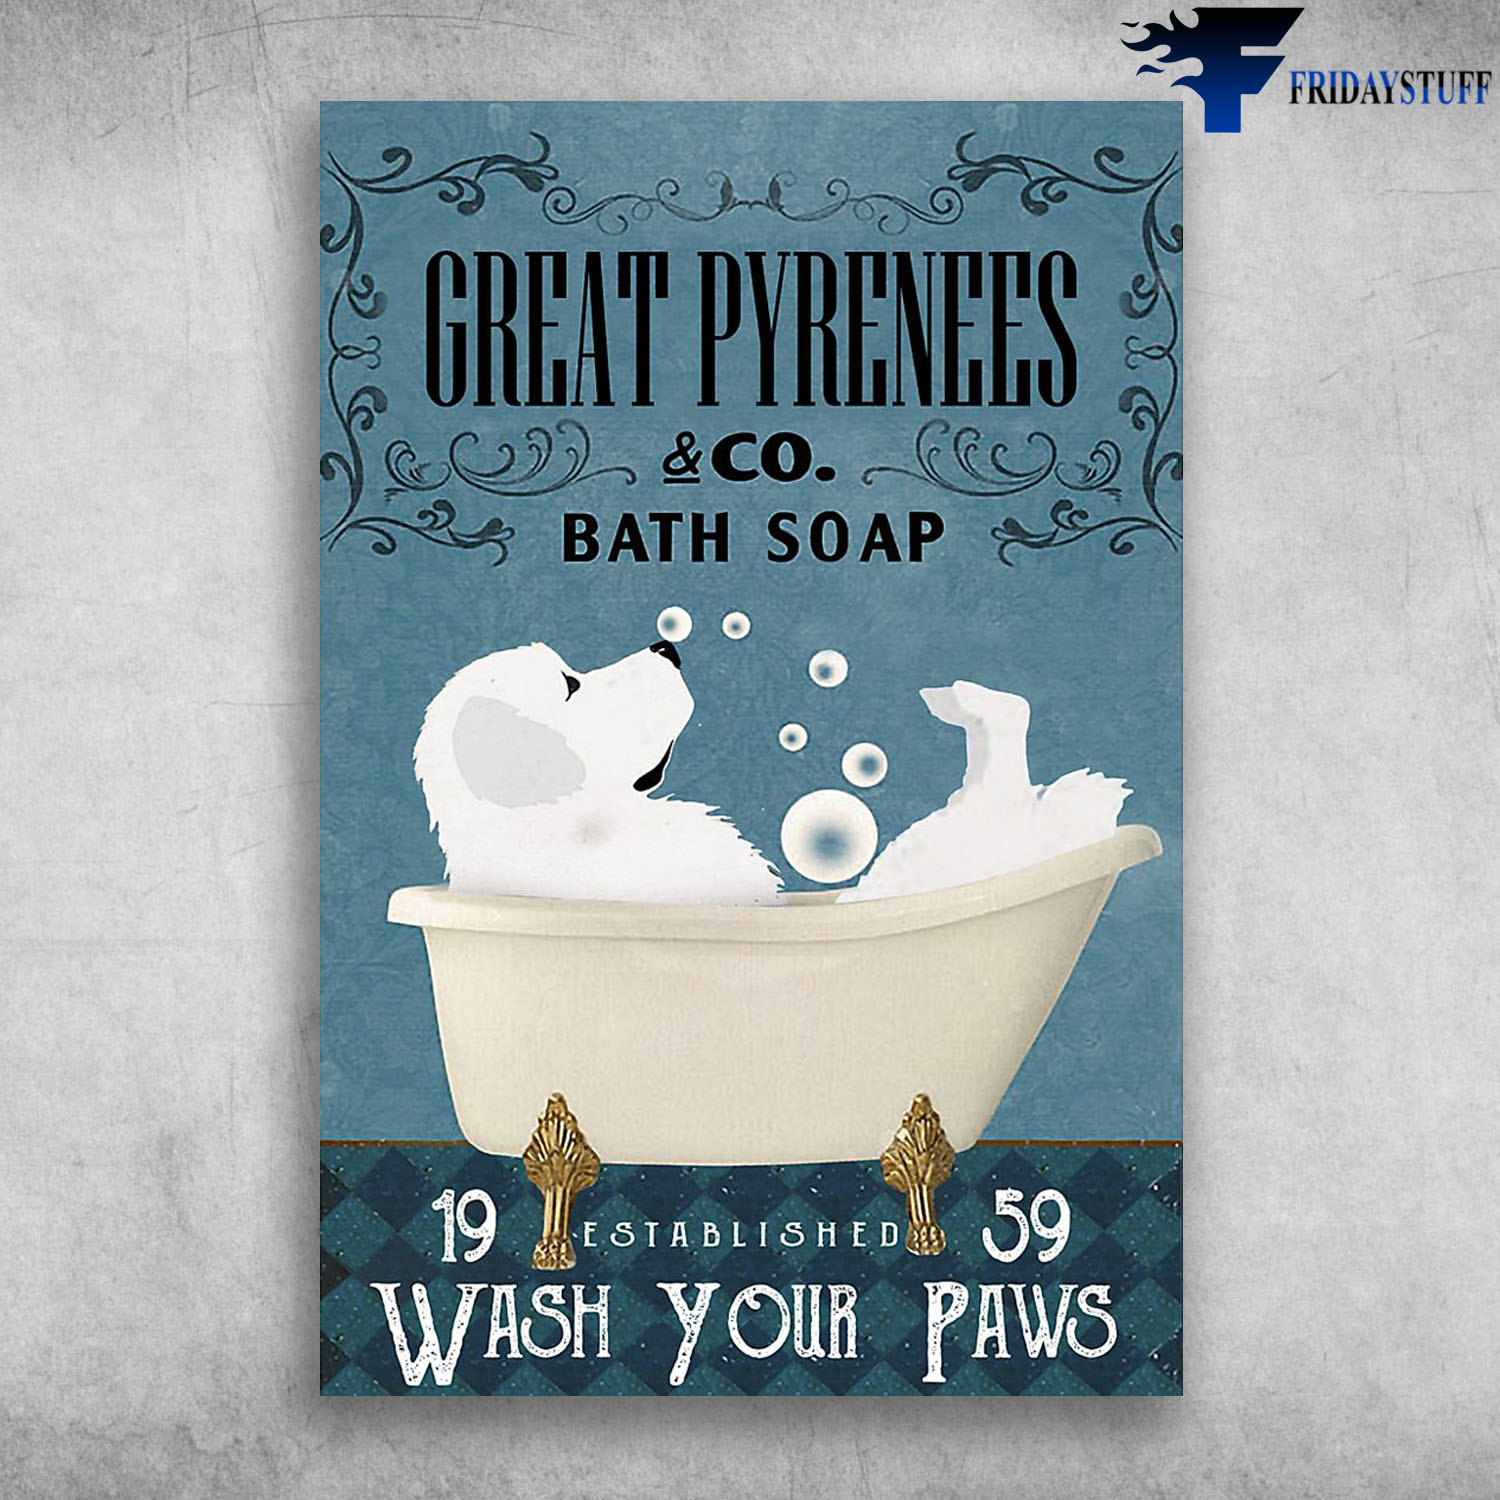 Great Pyrenees In Bathtub Bath Soap Established Wash Your Paws